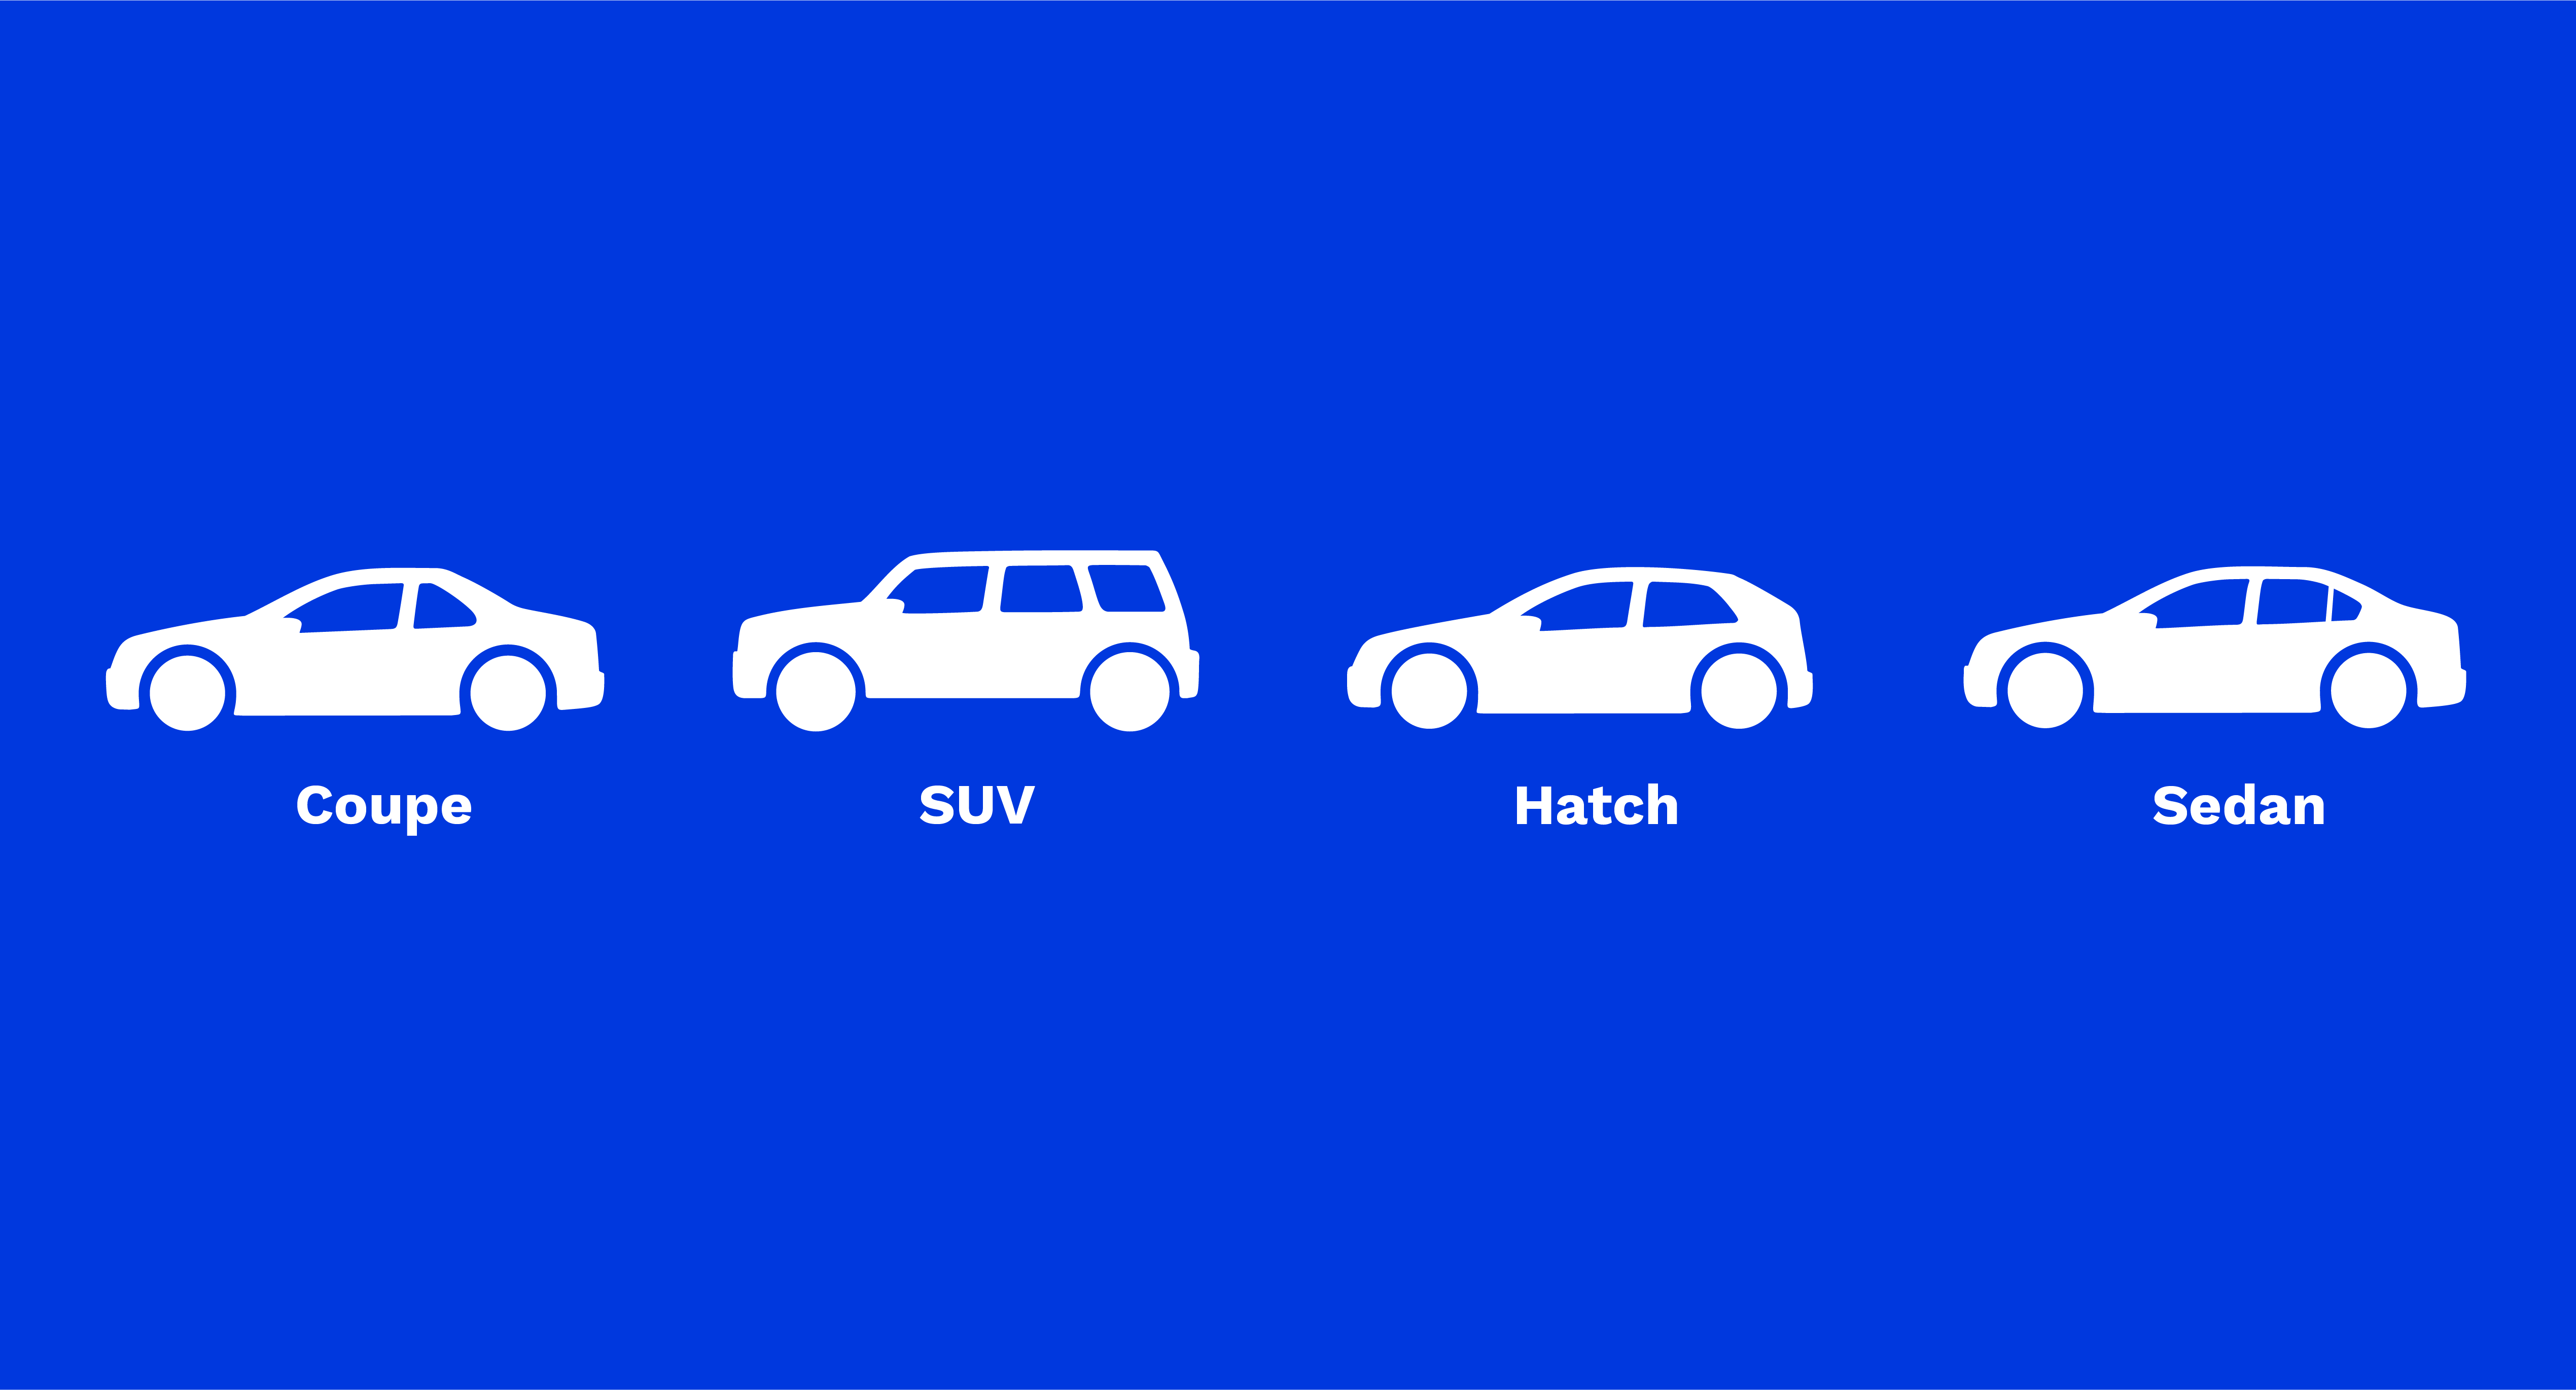 Deciphering car makes: Coupe, SUV, Hatch, Sedan